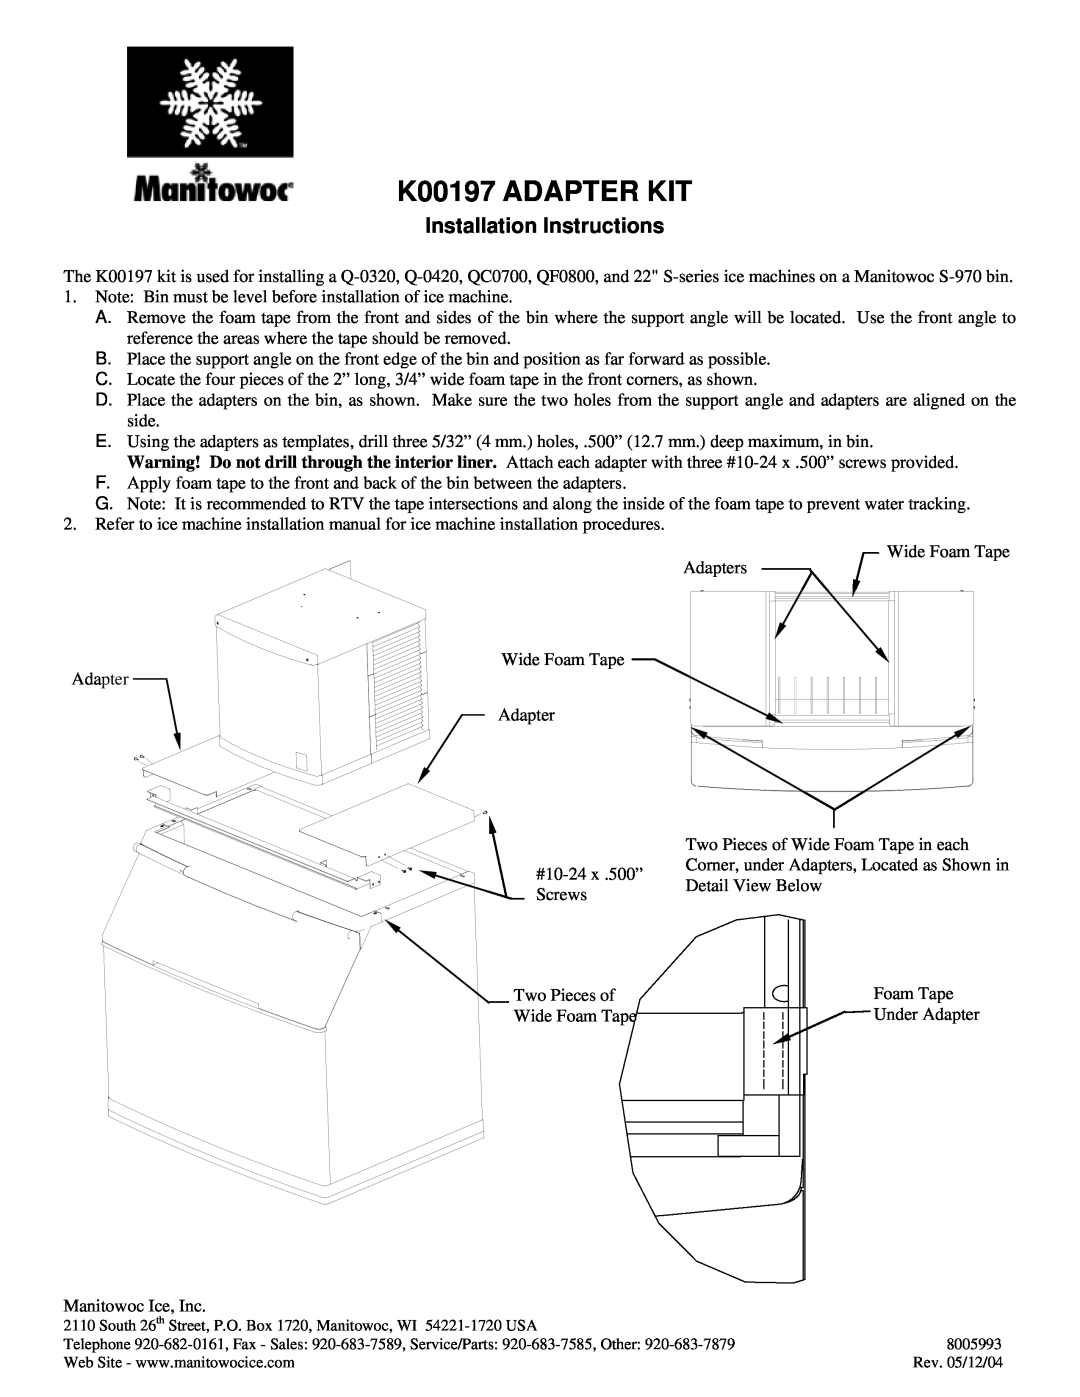 Manitowoc Ice installation instructions K00197 ADAPTER KIT, Installation Instructions 